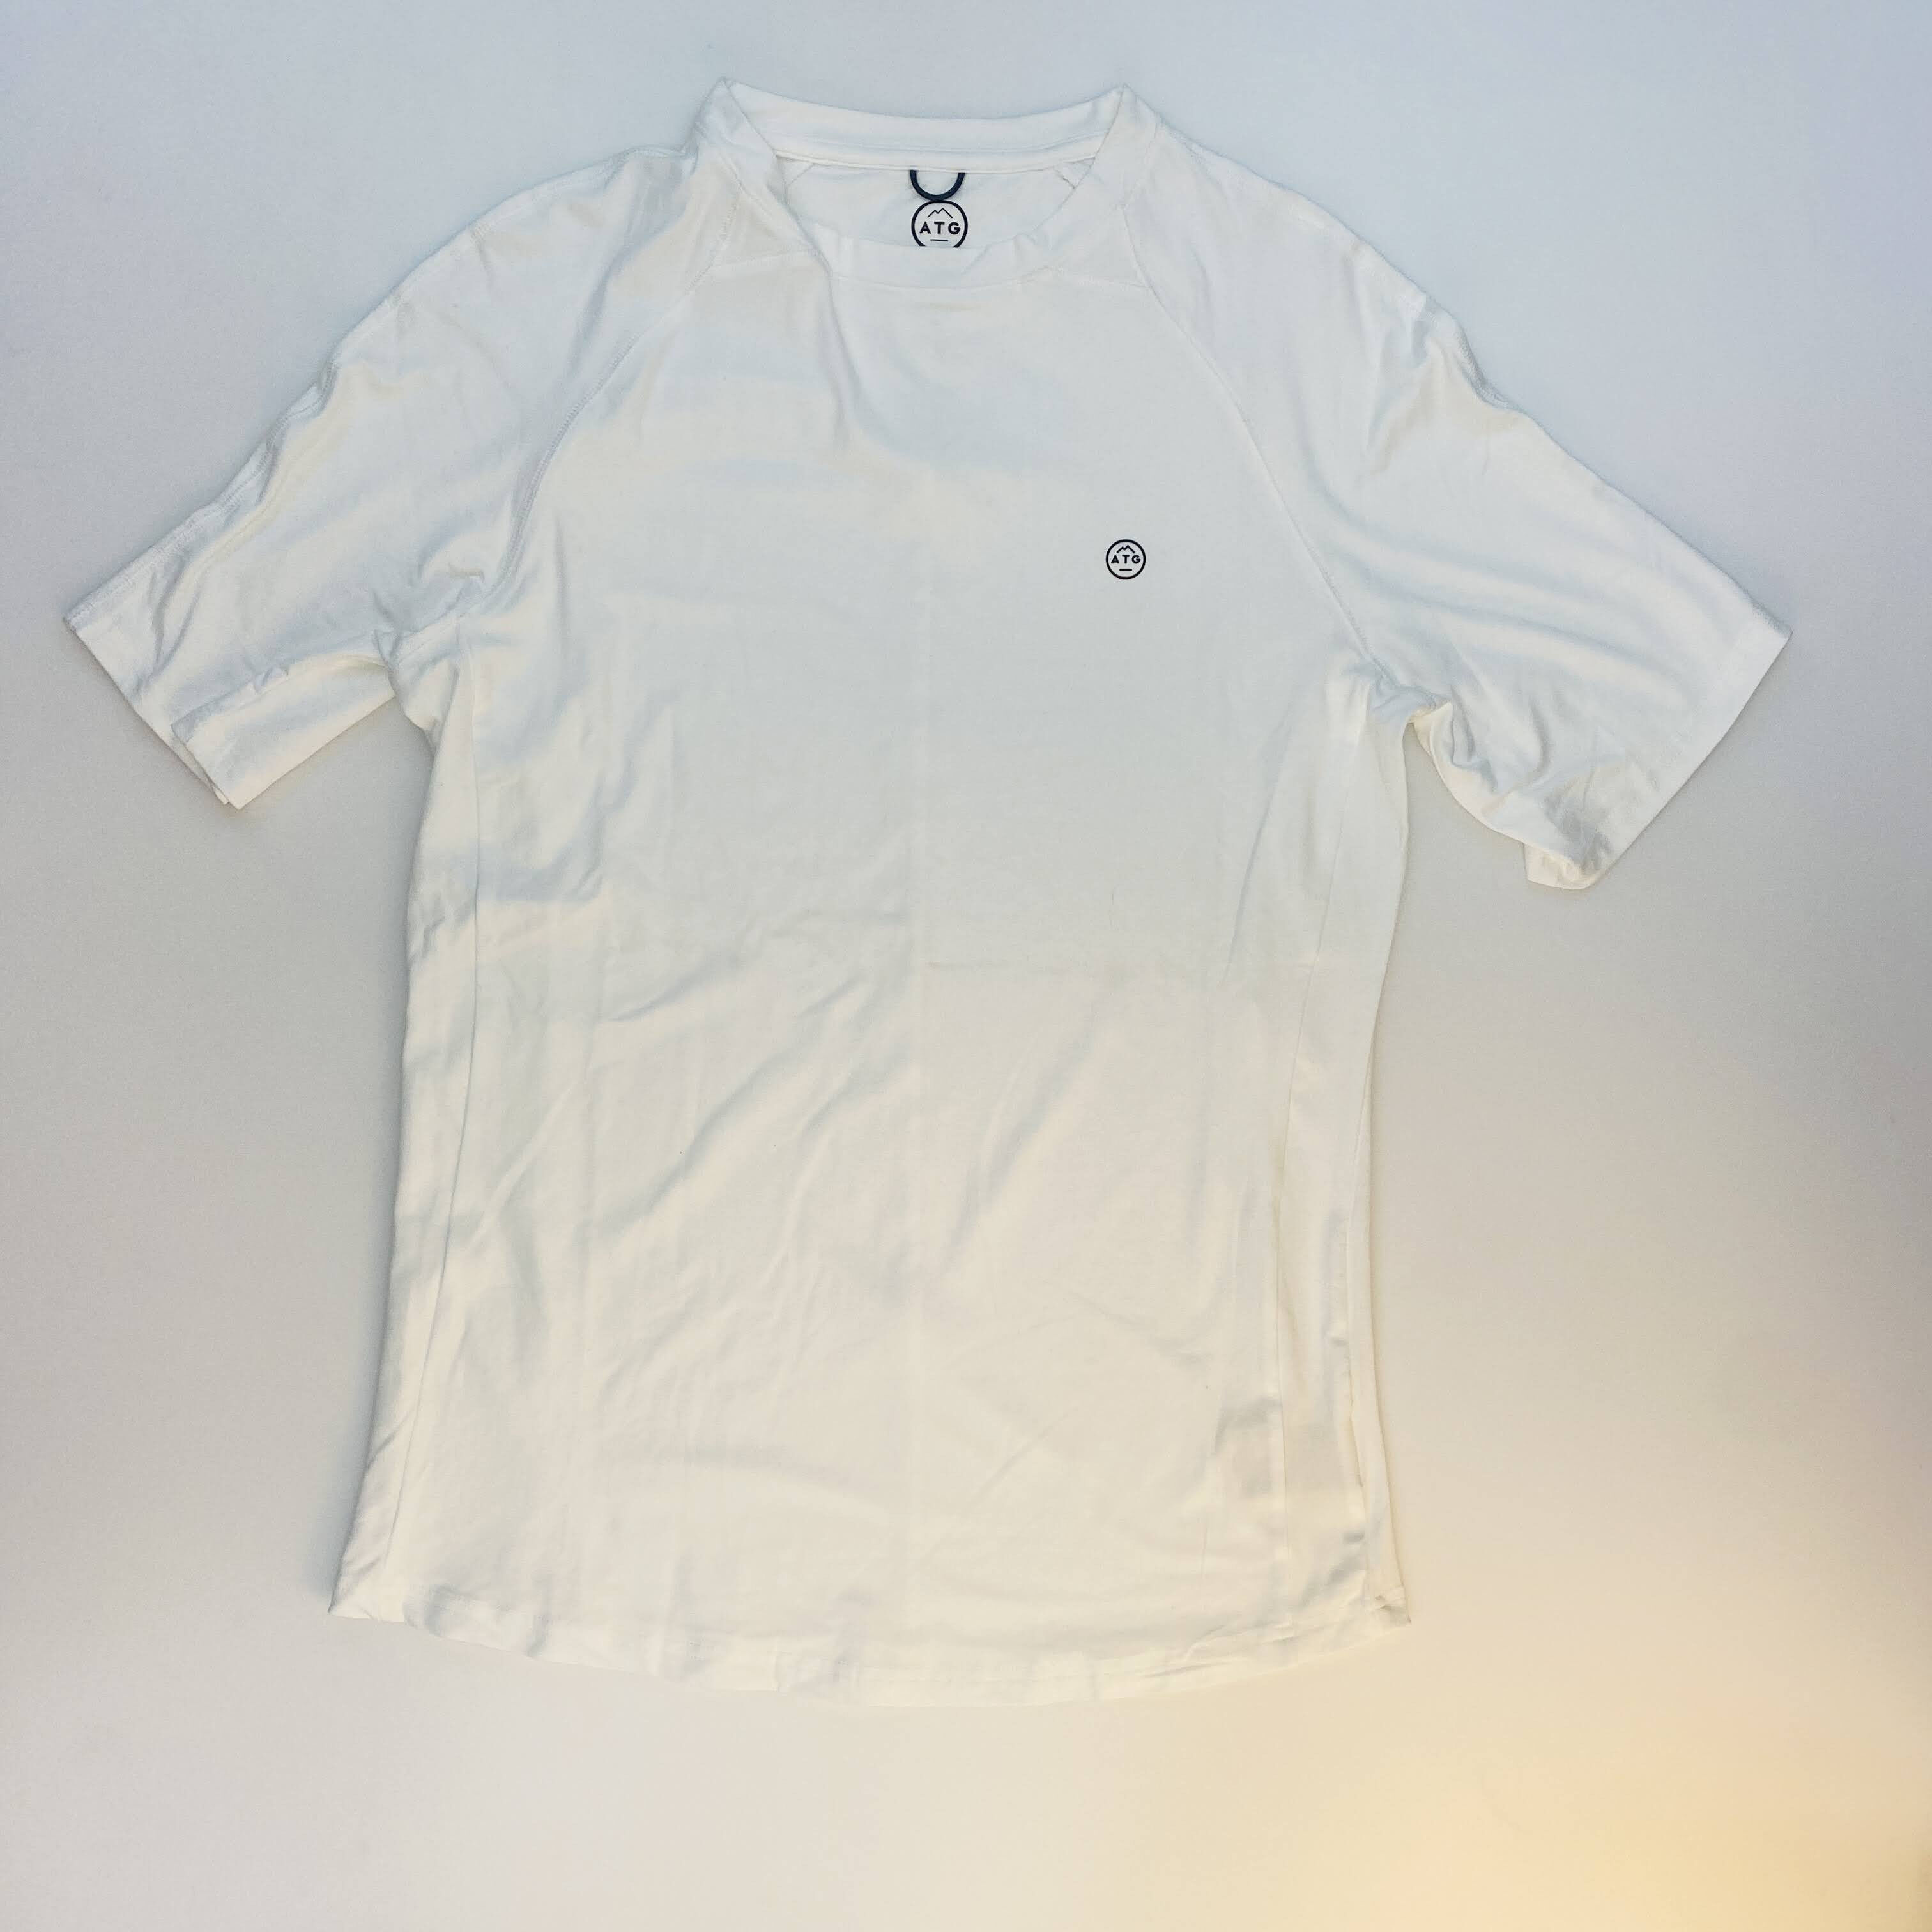 Wrangler Ss Performance T Shirt - Seconde main T-shirt homme - Blanc - S | Hardloop